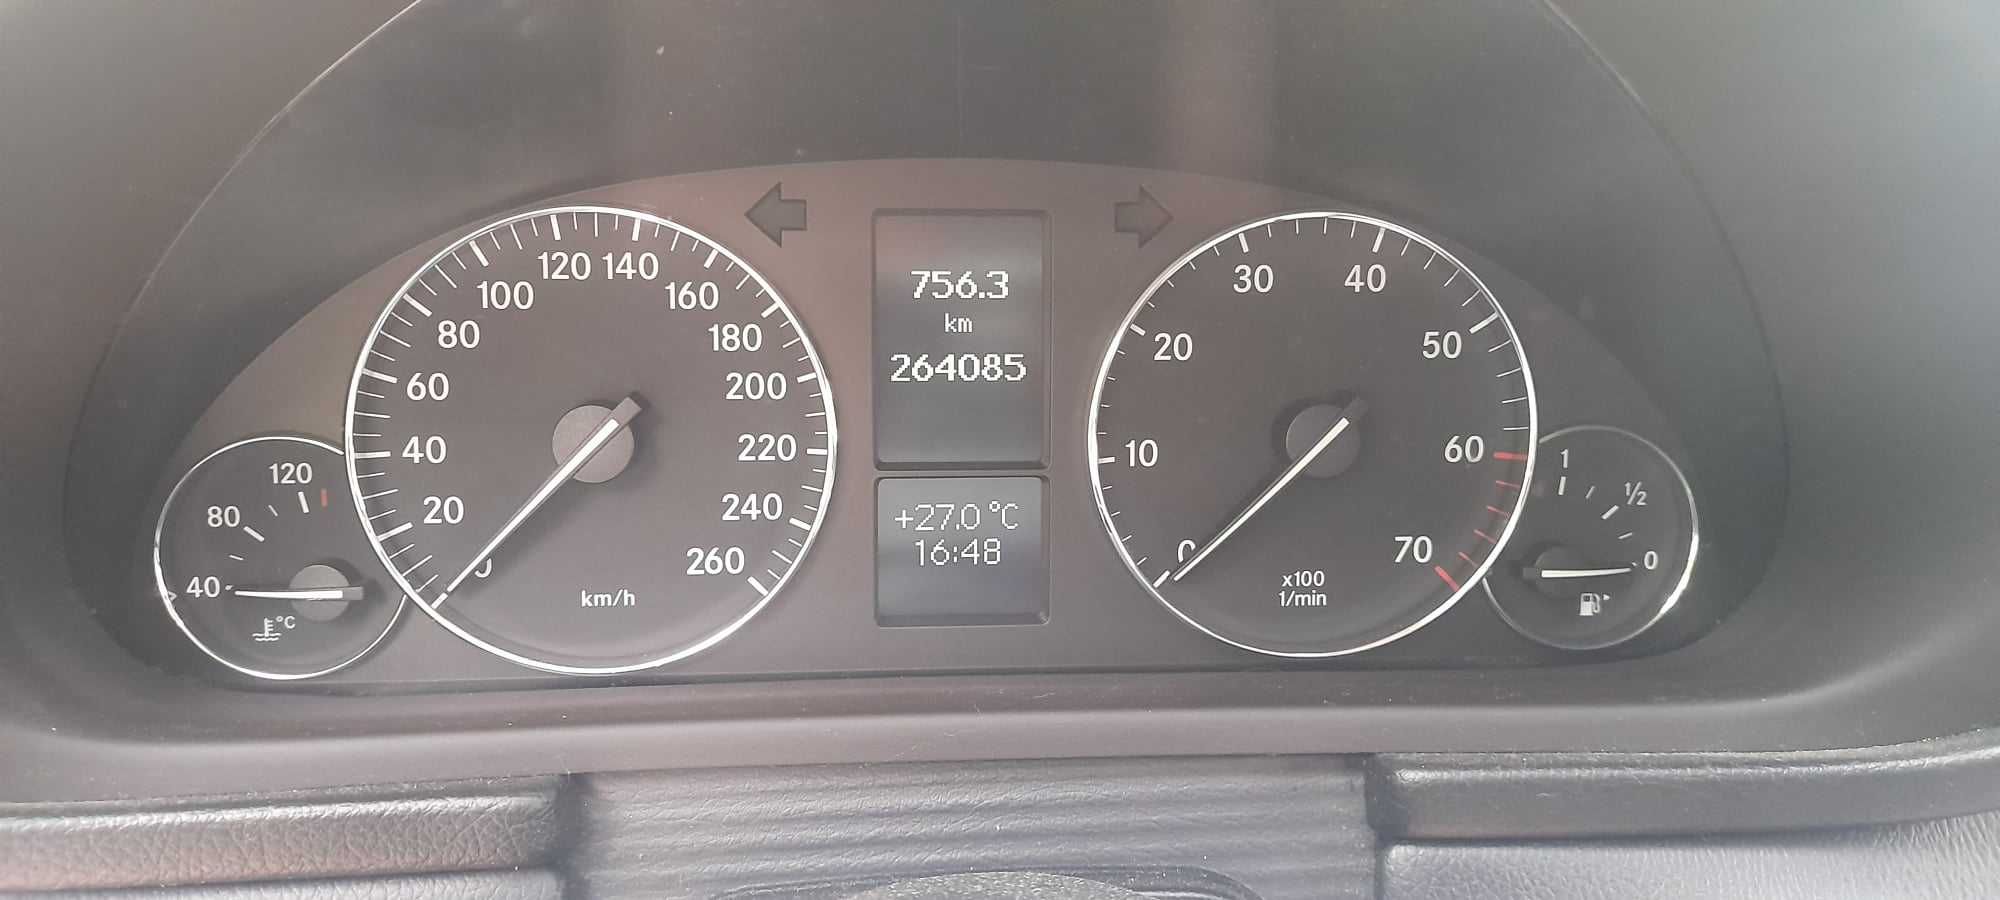 Mercedes c160 1.8 benzyna